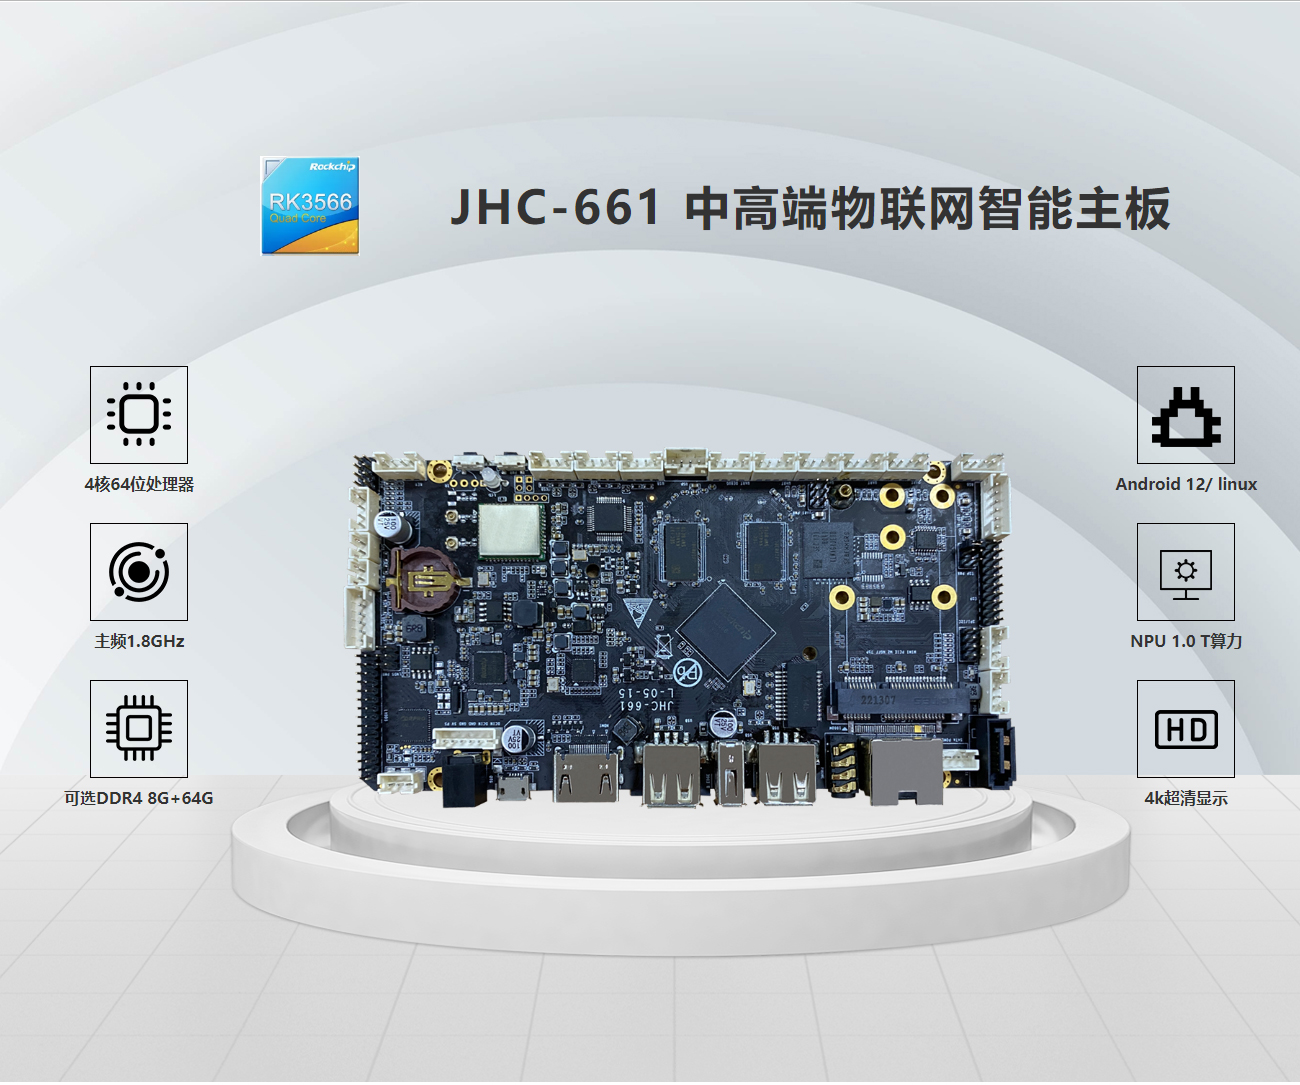 JHC-661 中高端物聯網智能主板